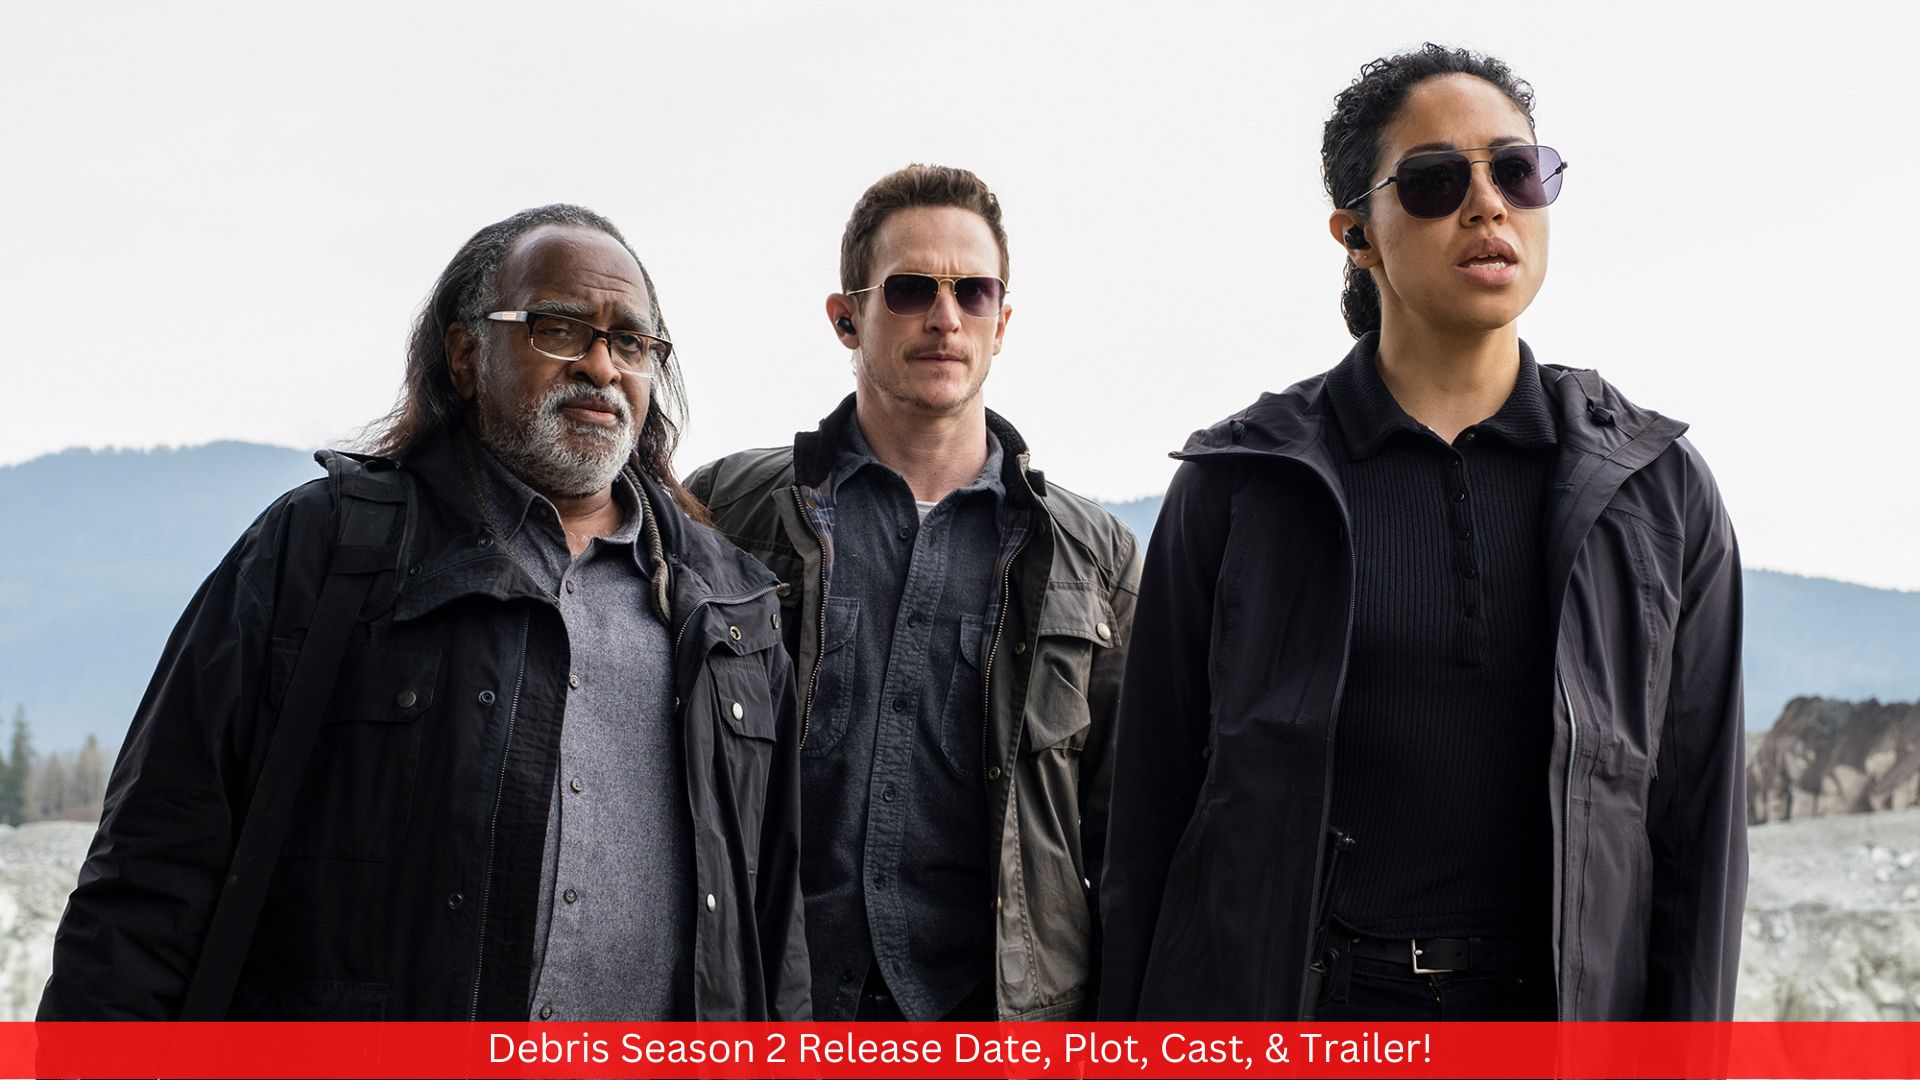 Debris Season 2 Release Date, Plot, Cast, & Trailer!